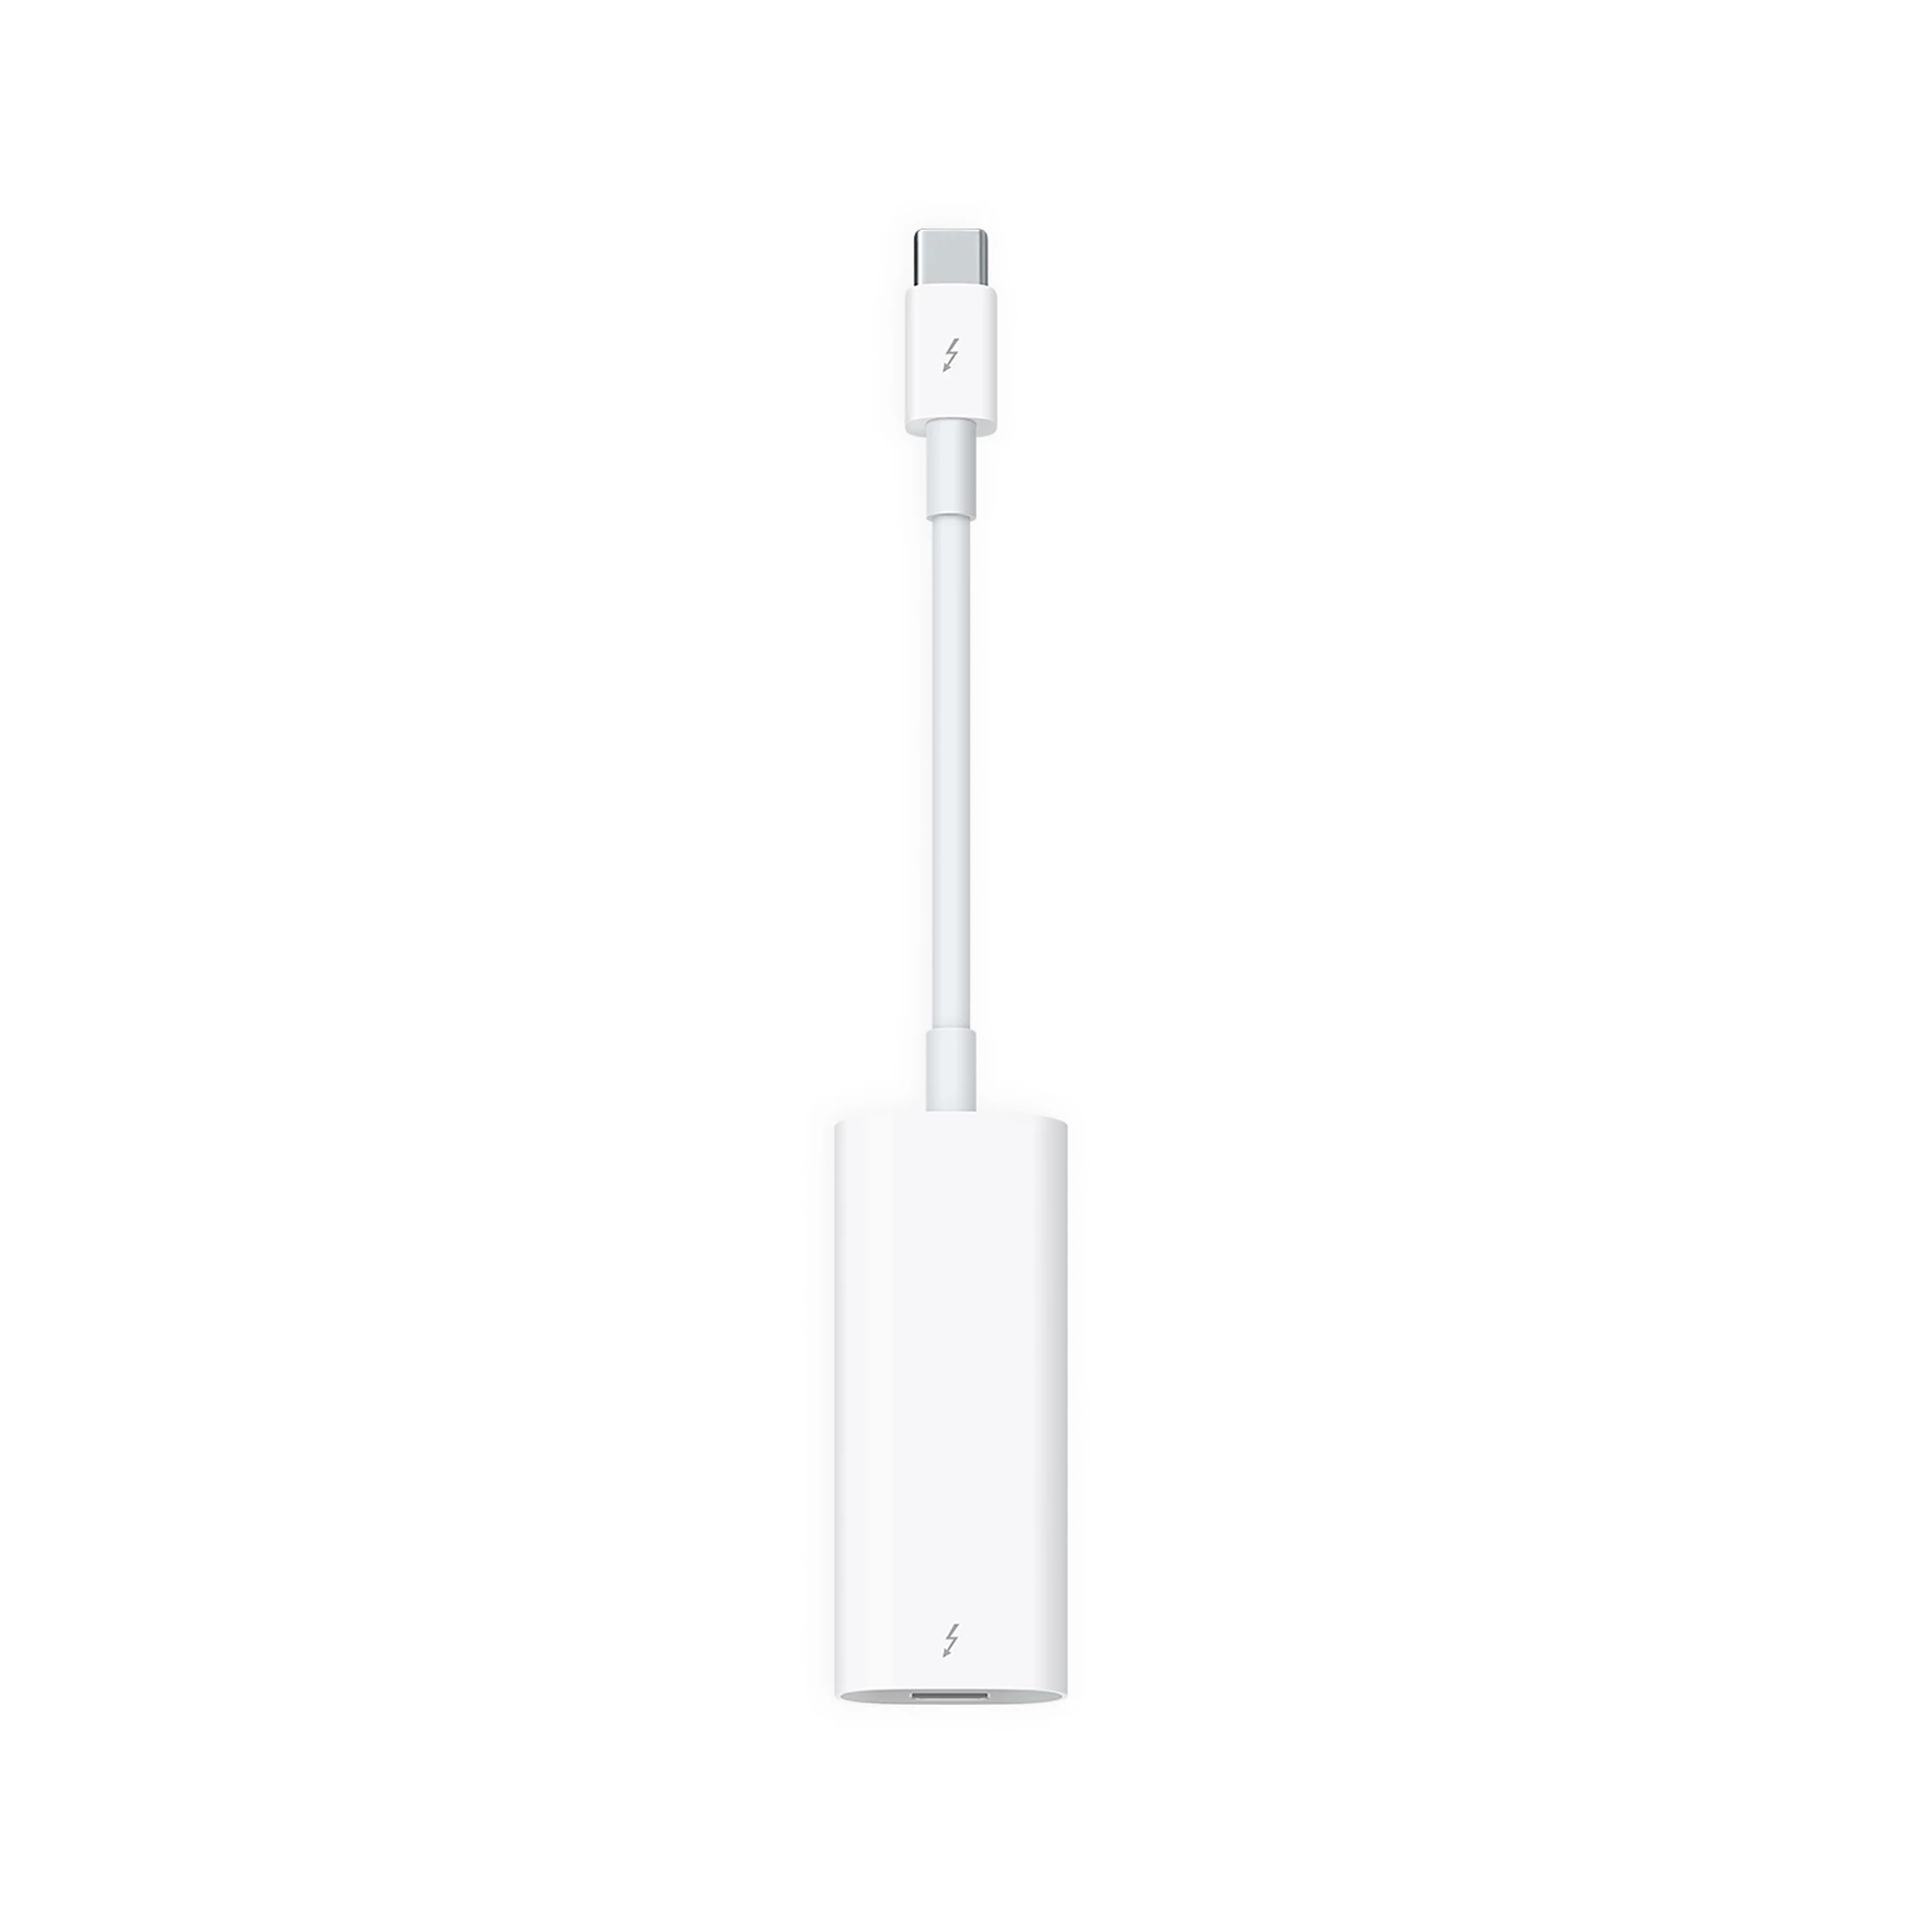 Apple Thunderbolt 3 (USB-C) to Thunderbolt 2 Adapter (MMEL2)